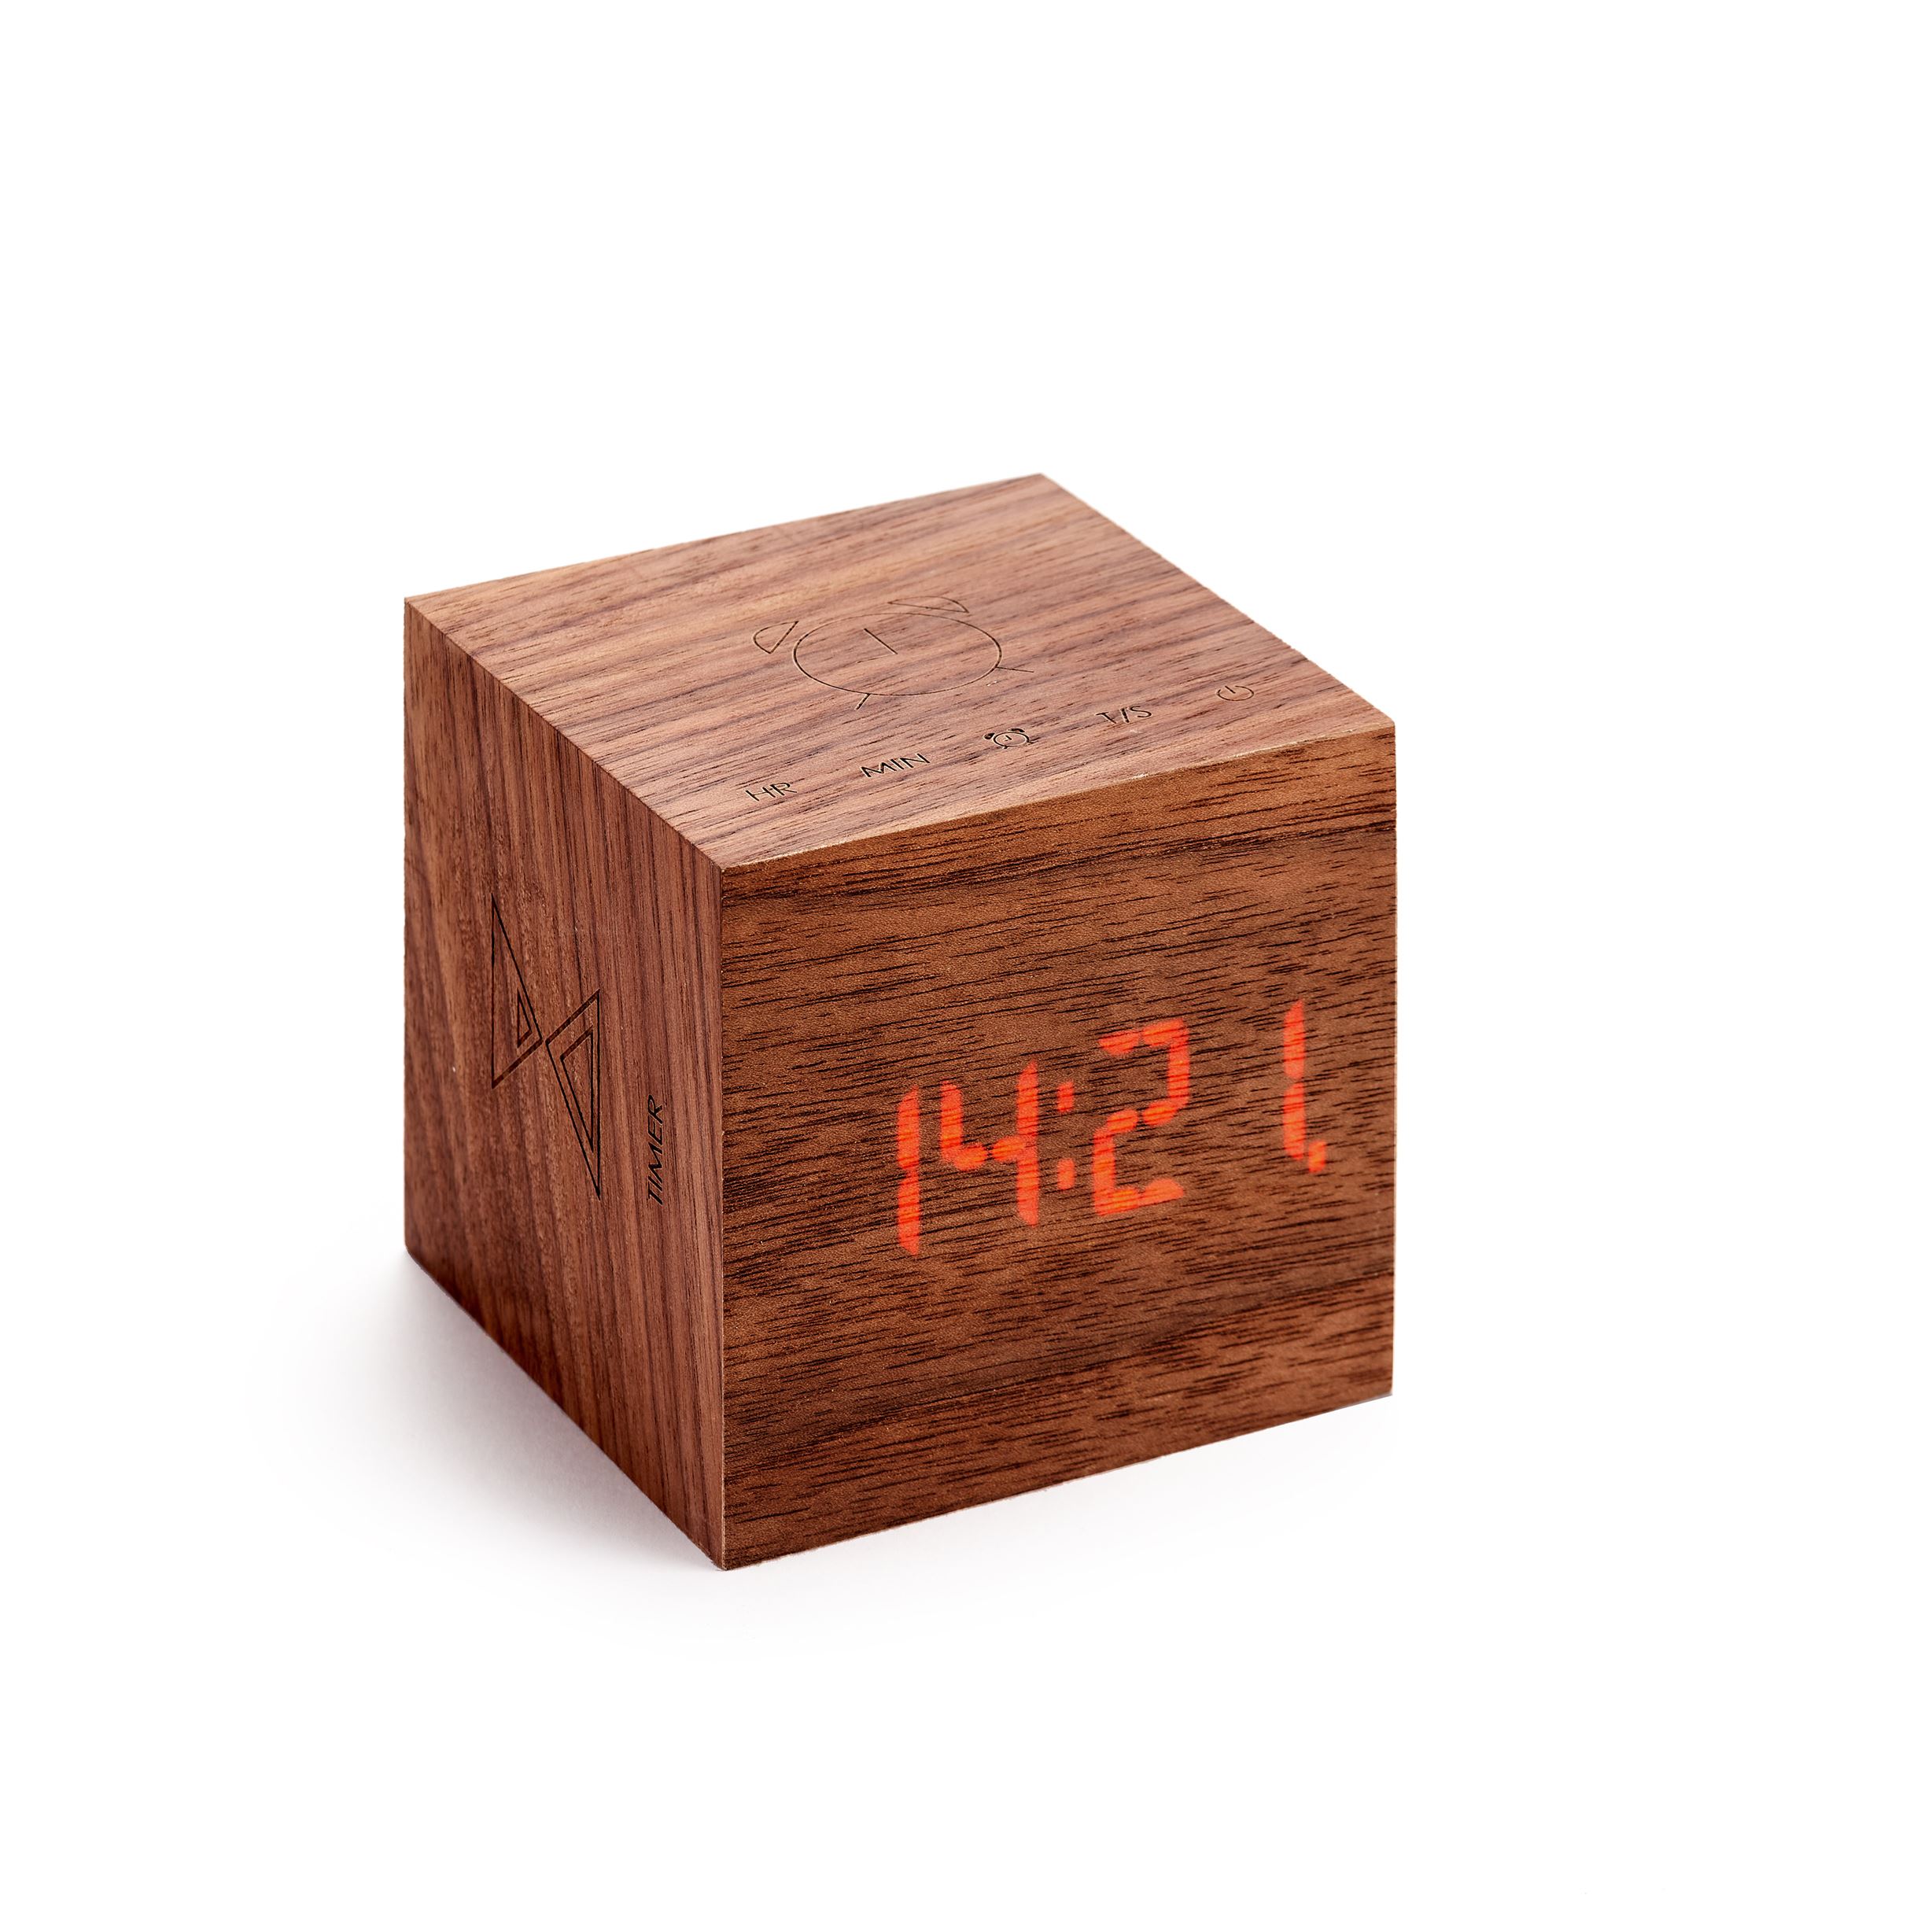 Gingko Cube plus clock in walnut wood plain background